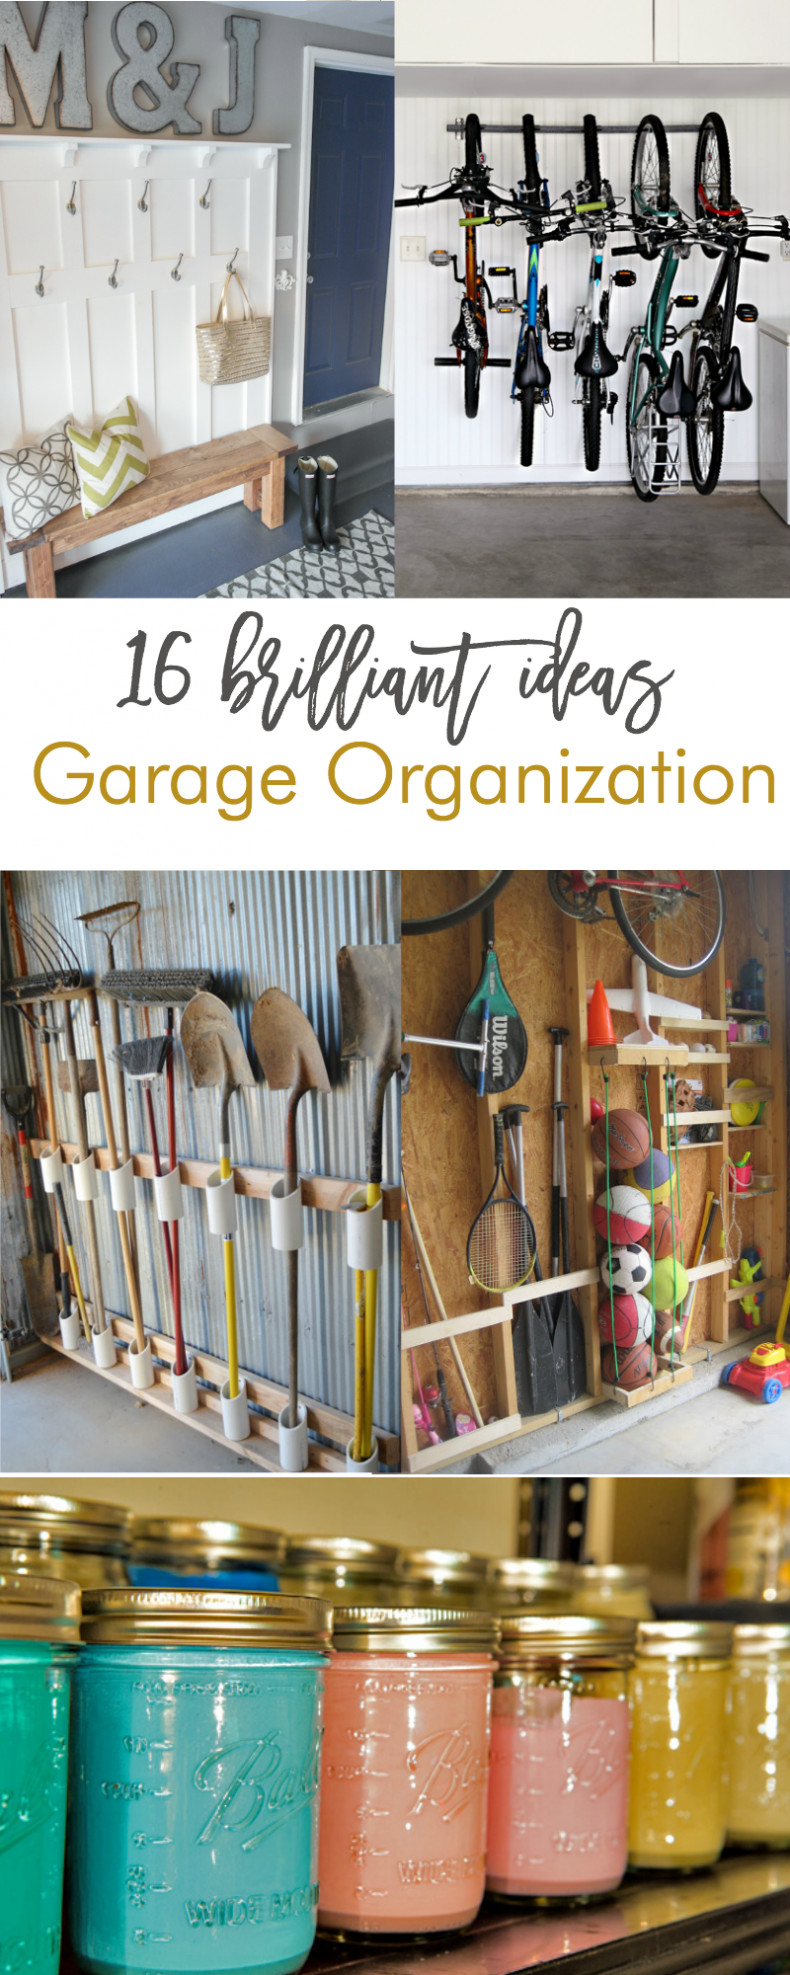 Best ideas about DIY Tool Organization Ideas
. Save or Pin 16 Brilliant DIY Garage Organization Ideas Now.